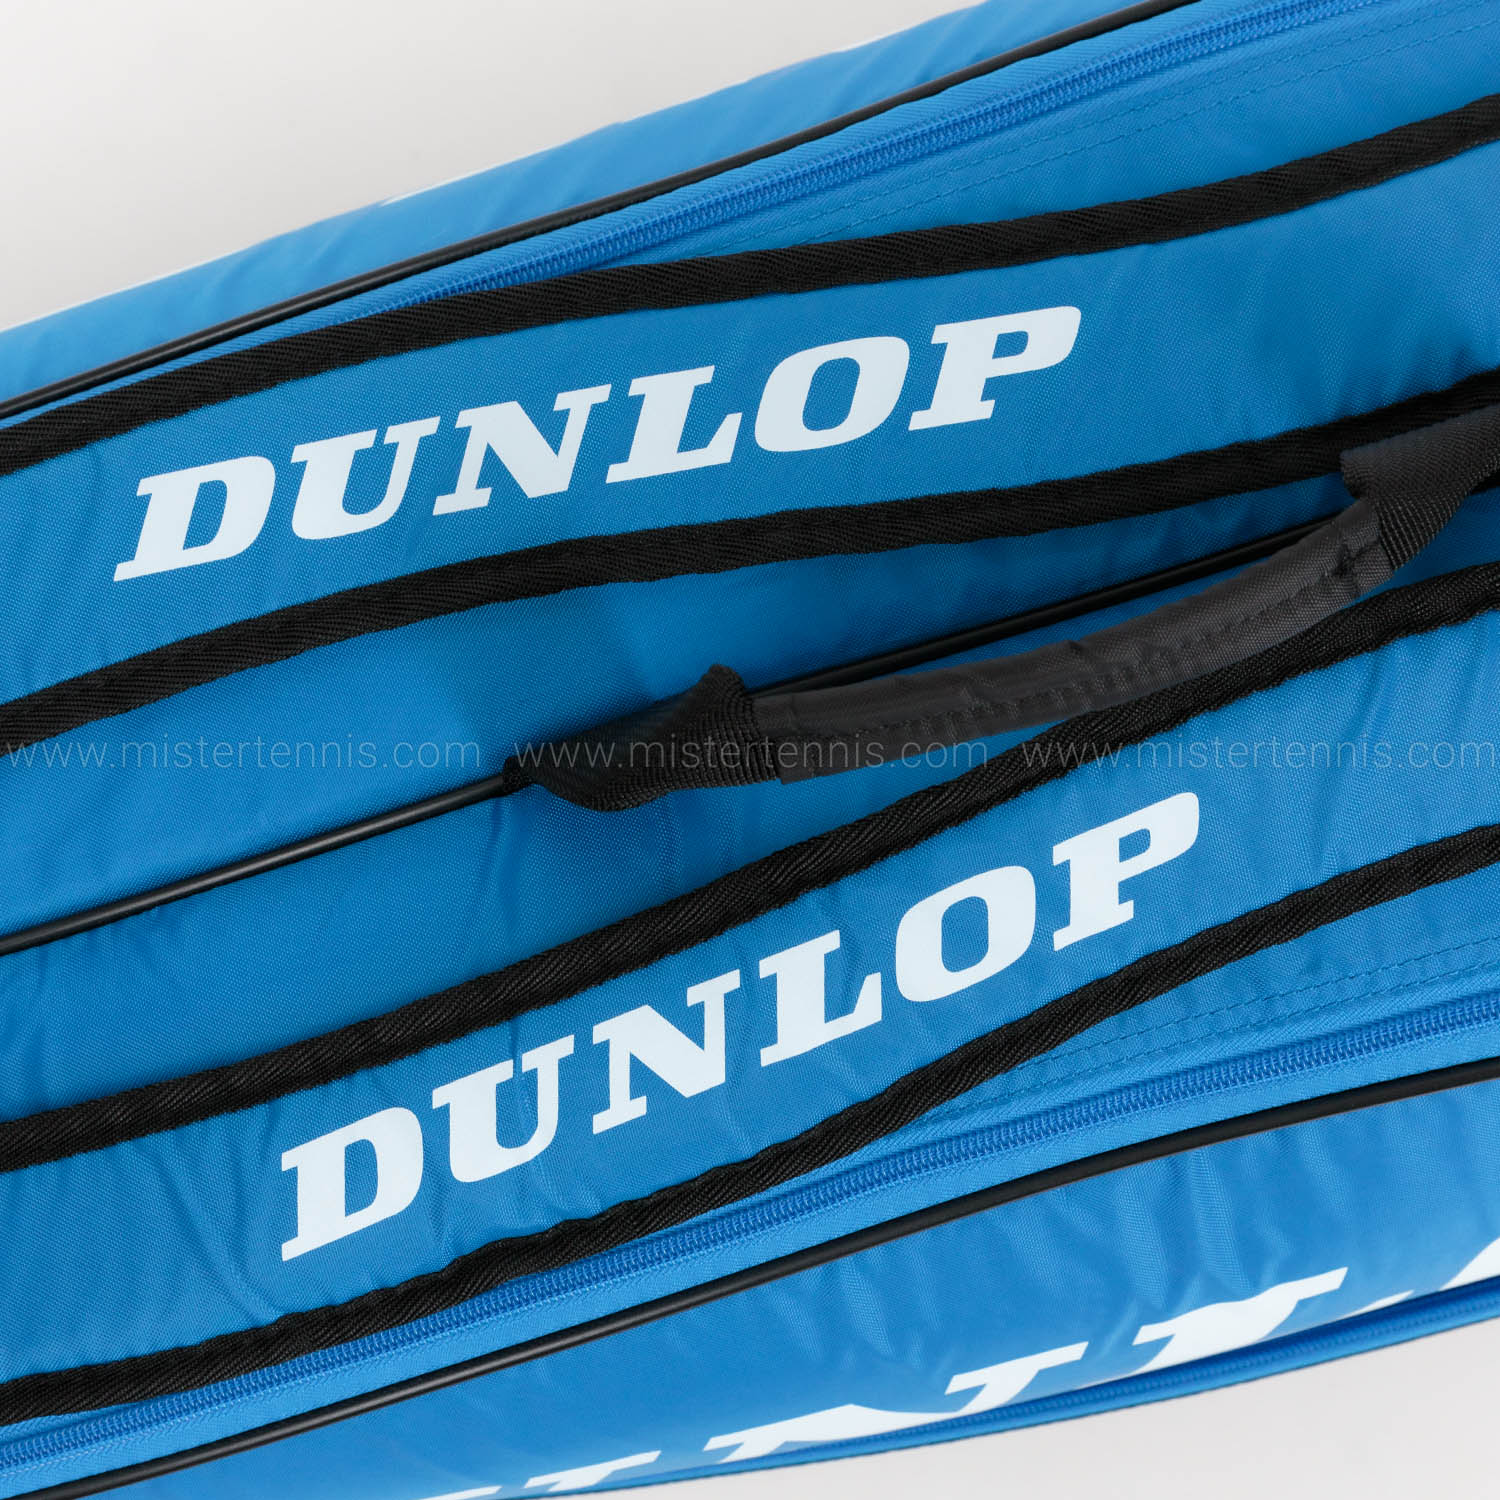 Dunlop FX Club x 6 Bolsa - Black/Blue